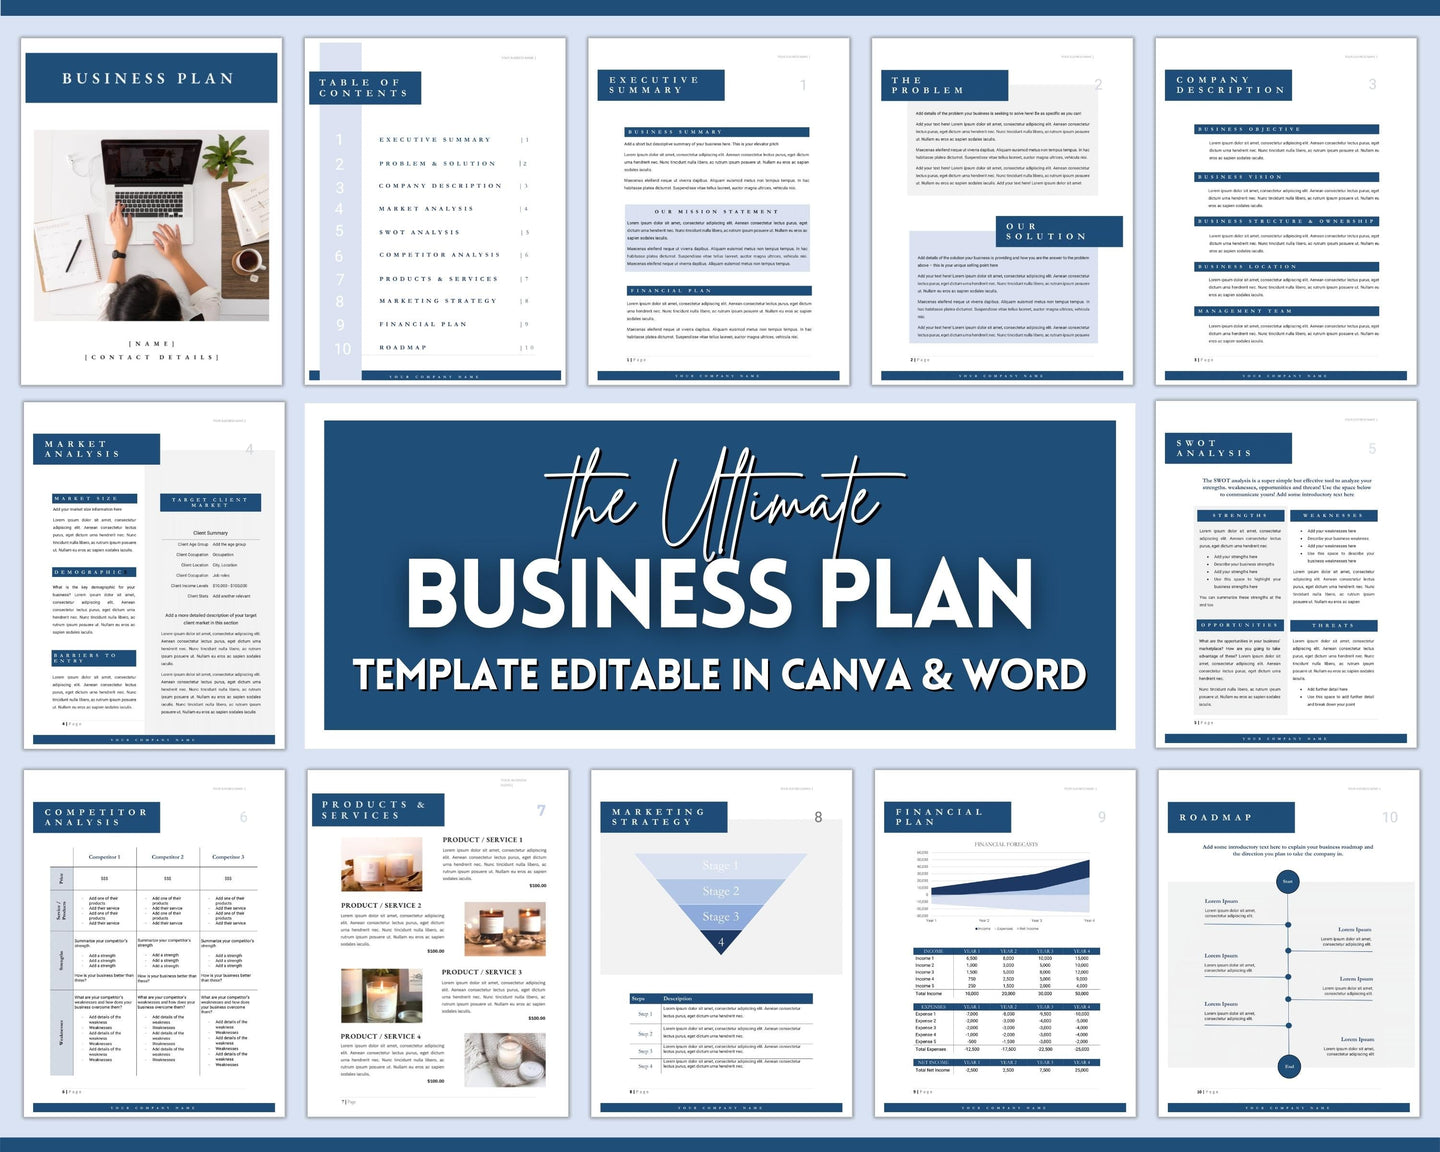 Business Plan Template, Small Business Planner Proposal, Start Up Workbook, Business Plan Analysis, Canva, Word, Side Hustle, EDITABLE Plan - NAVY